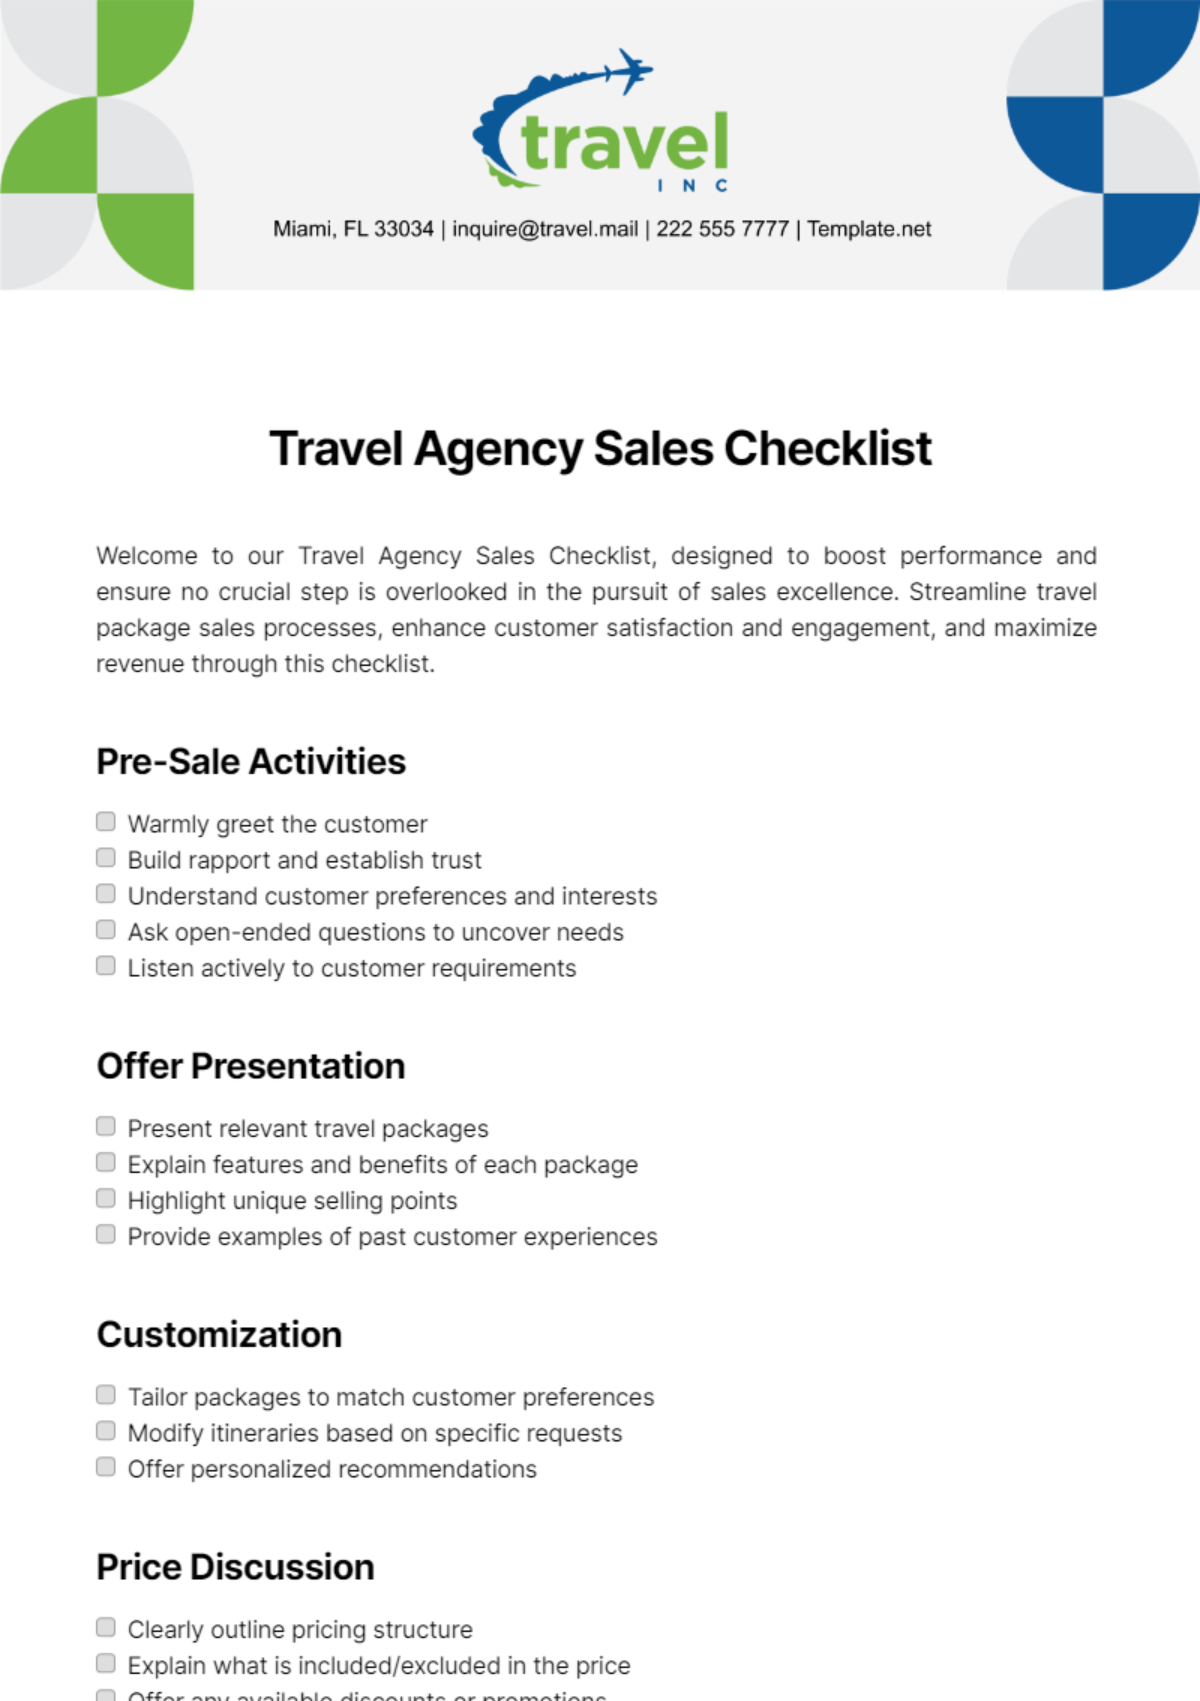 Travel Agency Sales Checklist Template